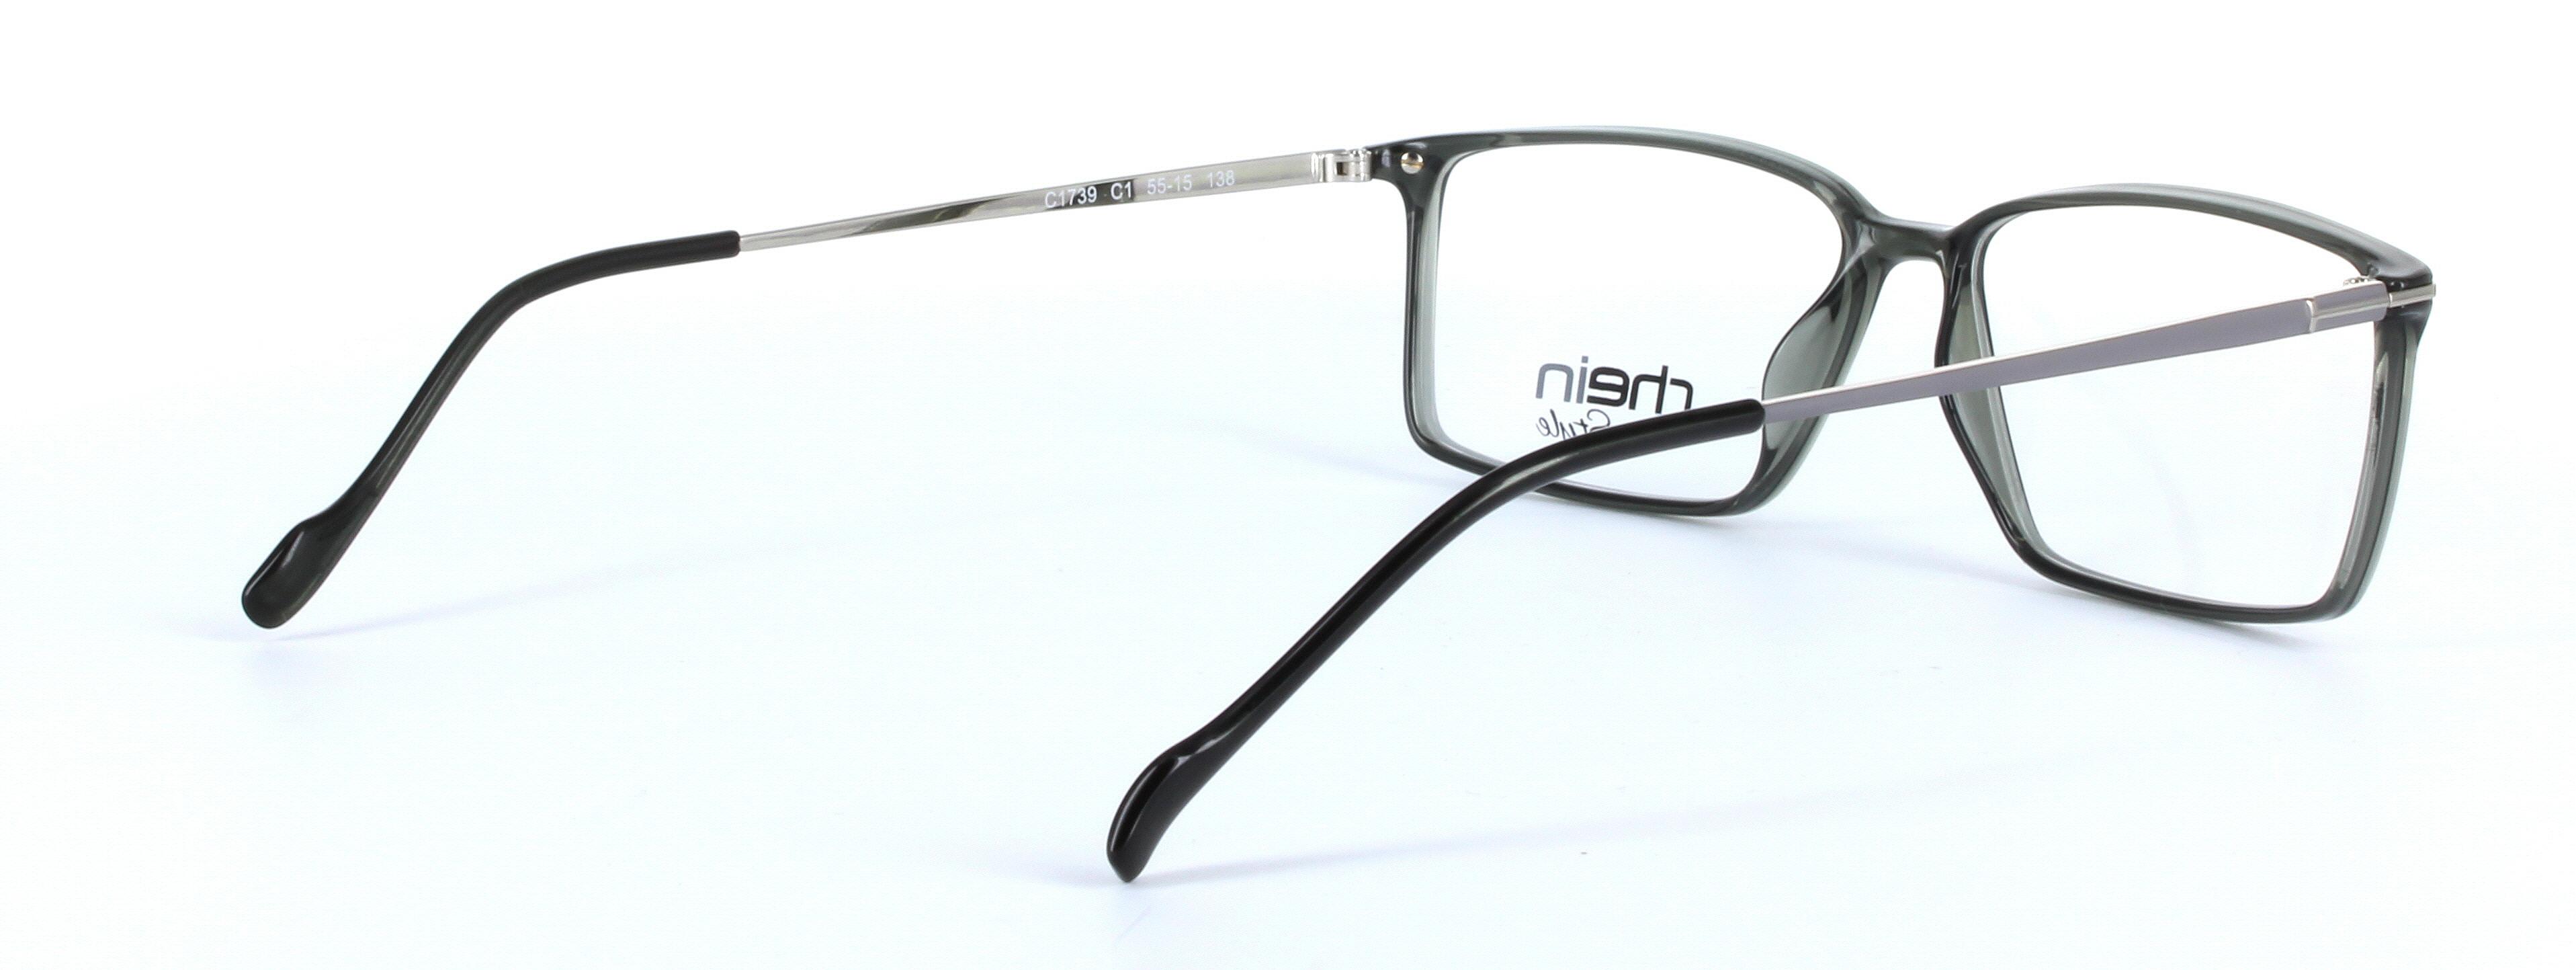 Omega Grey Full Rim Rectangular Square Plastic Glasses - Image View 4